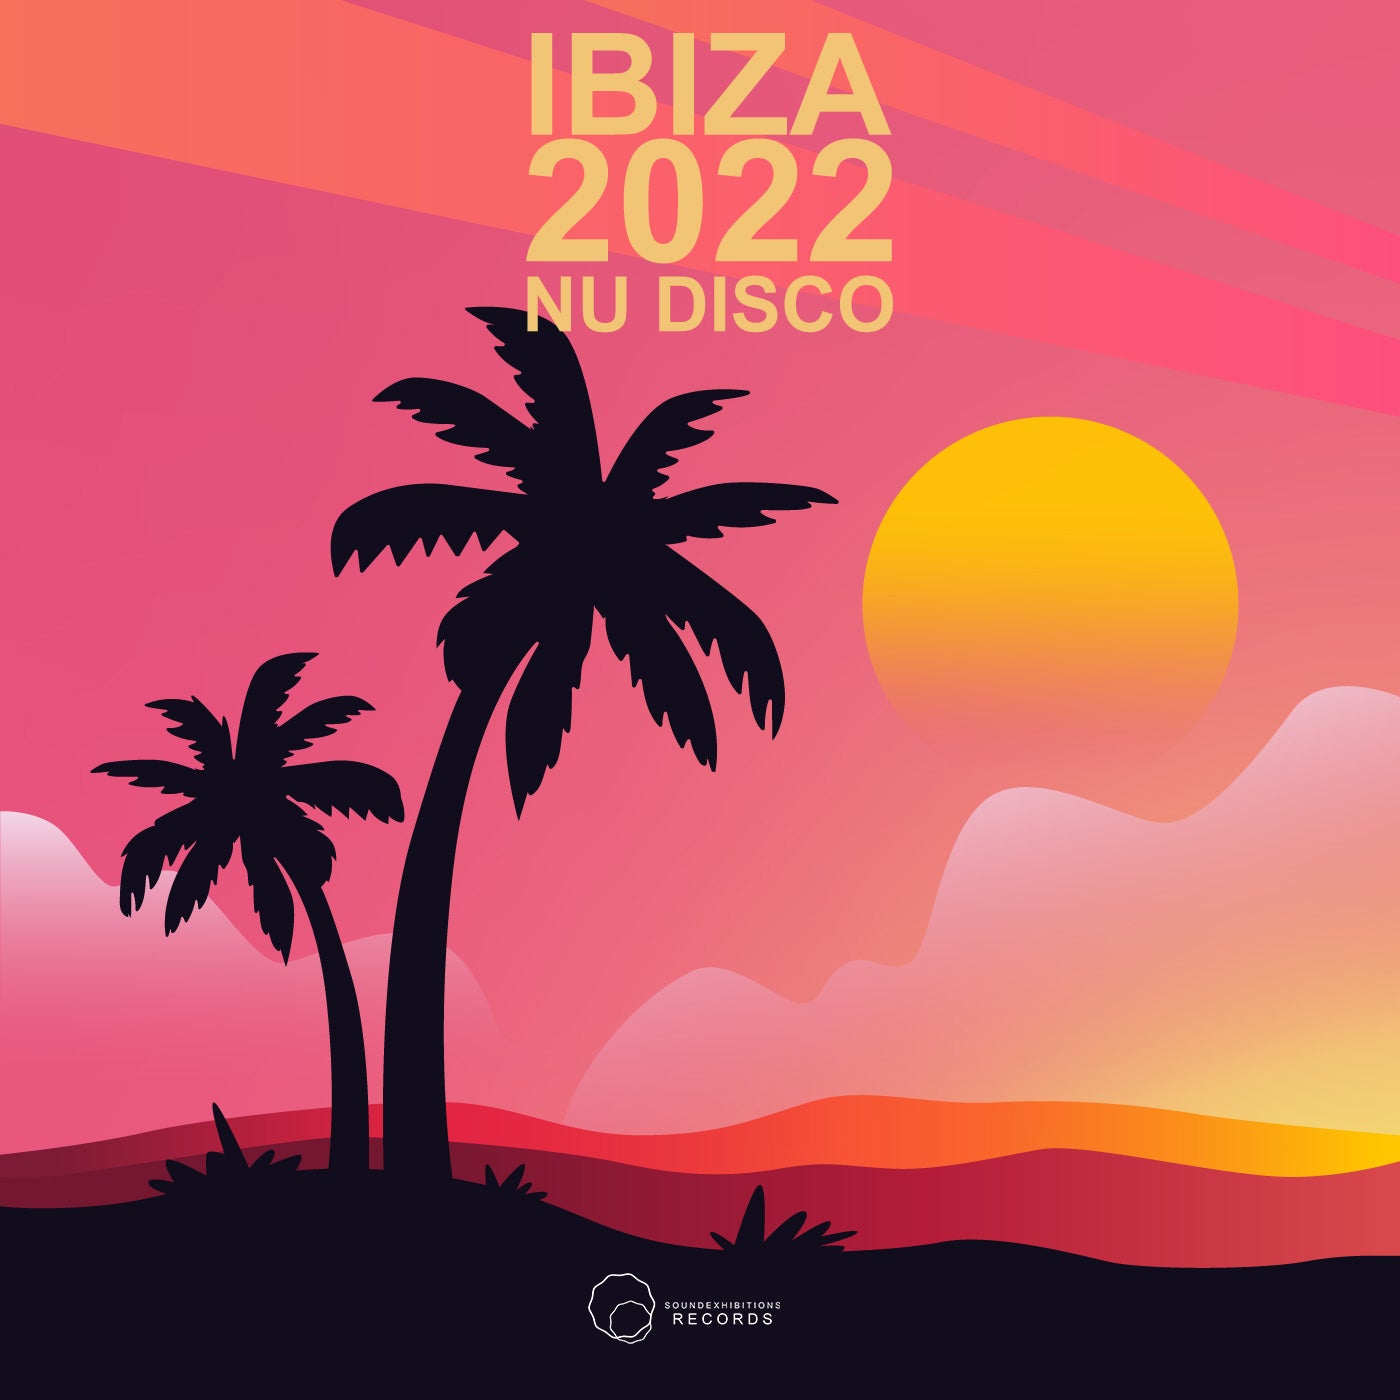 Ibiza 2022 Nu Disco